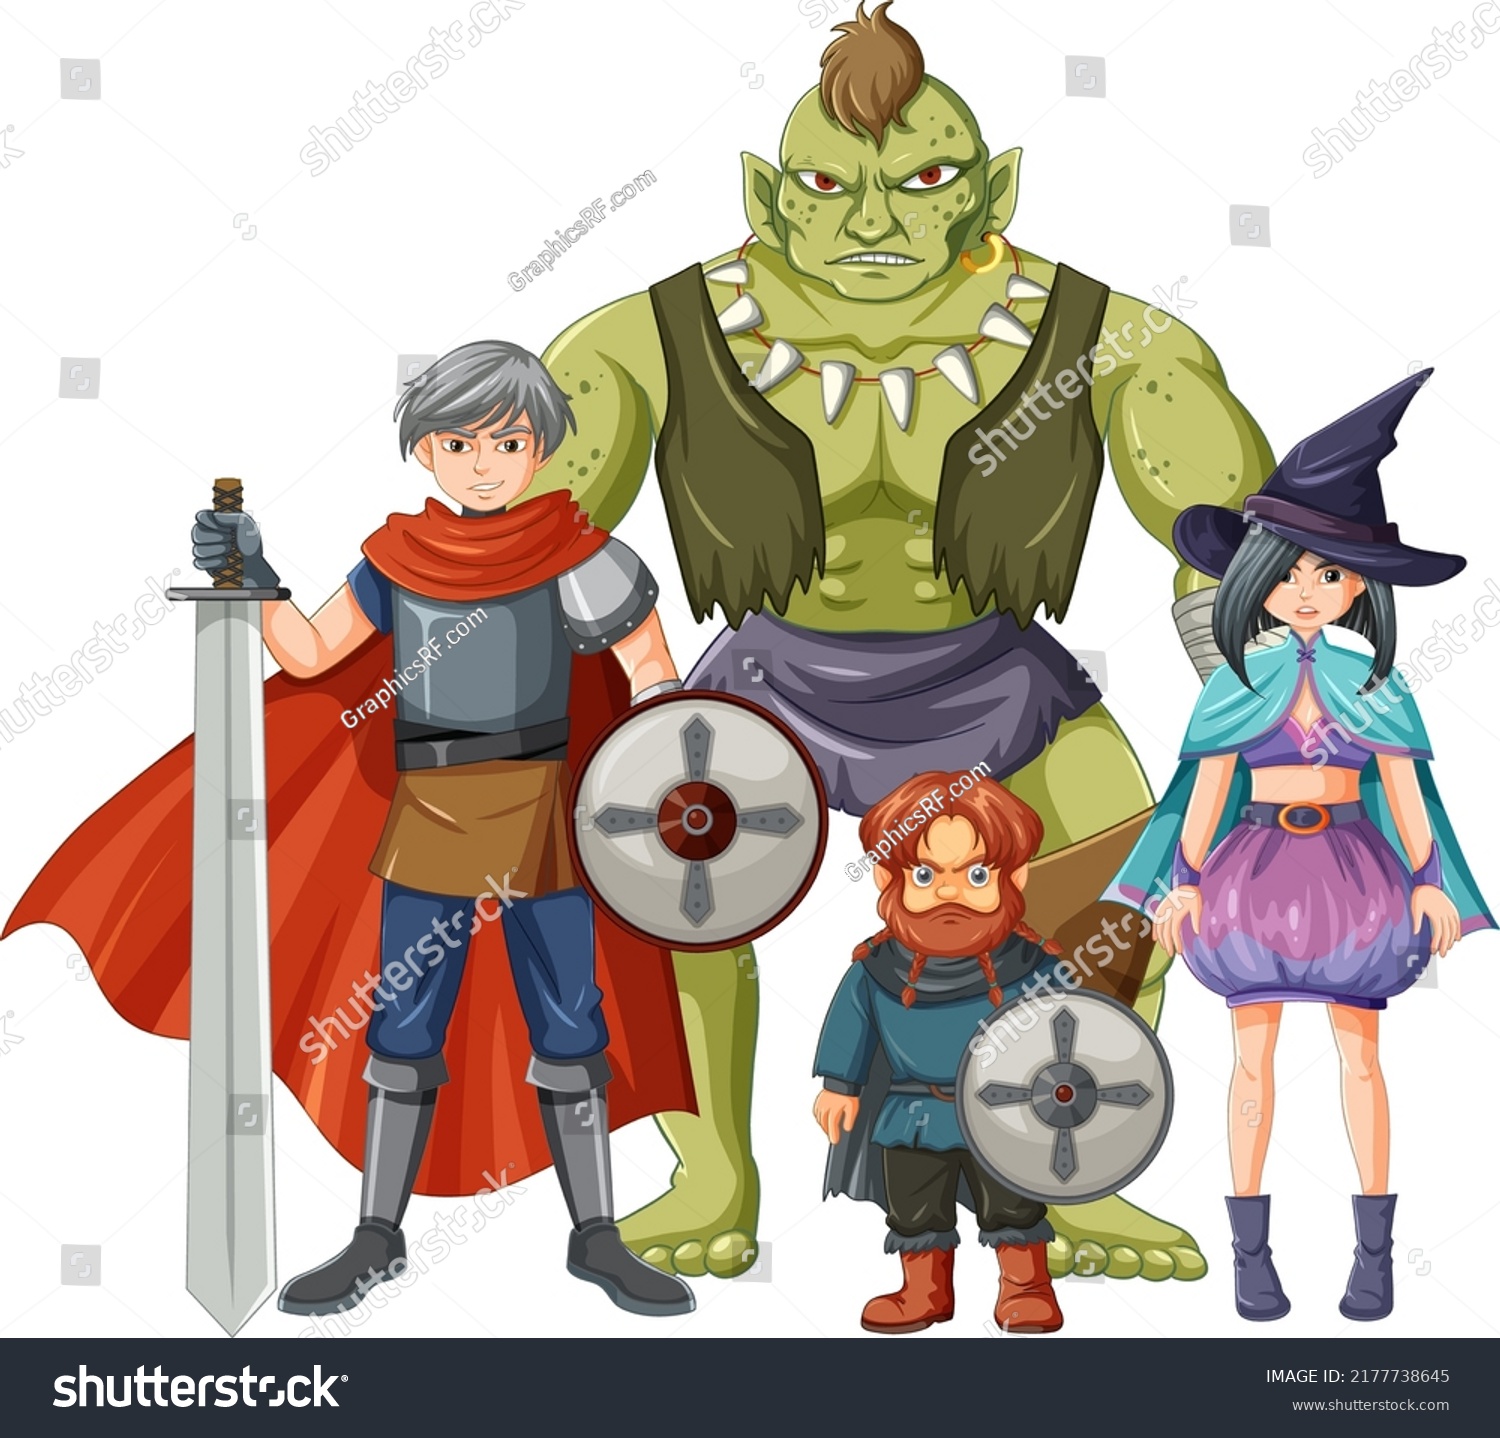 SVG of Fantasy folk cartoon characters set illustration svg